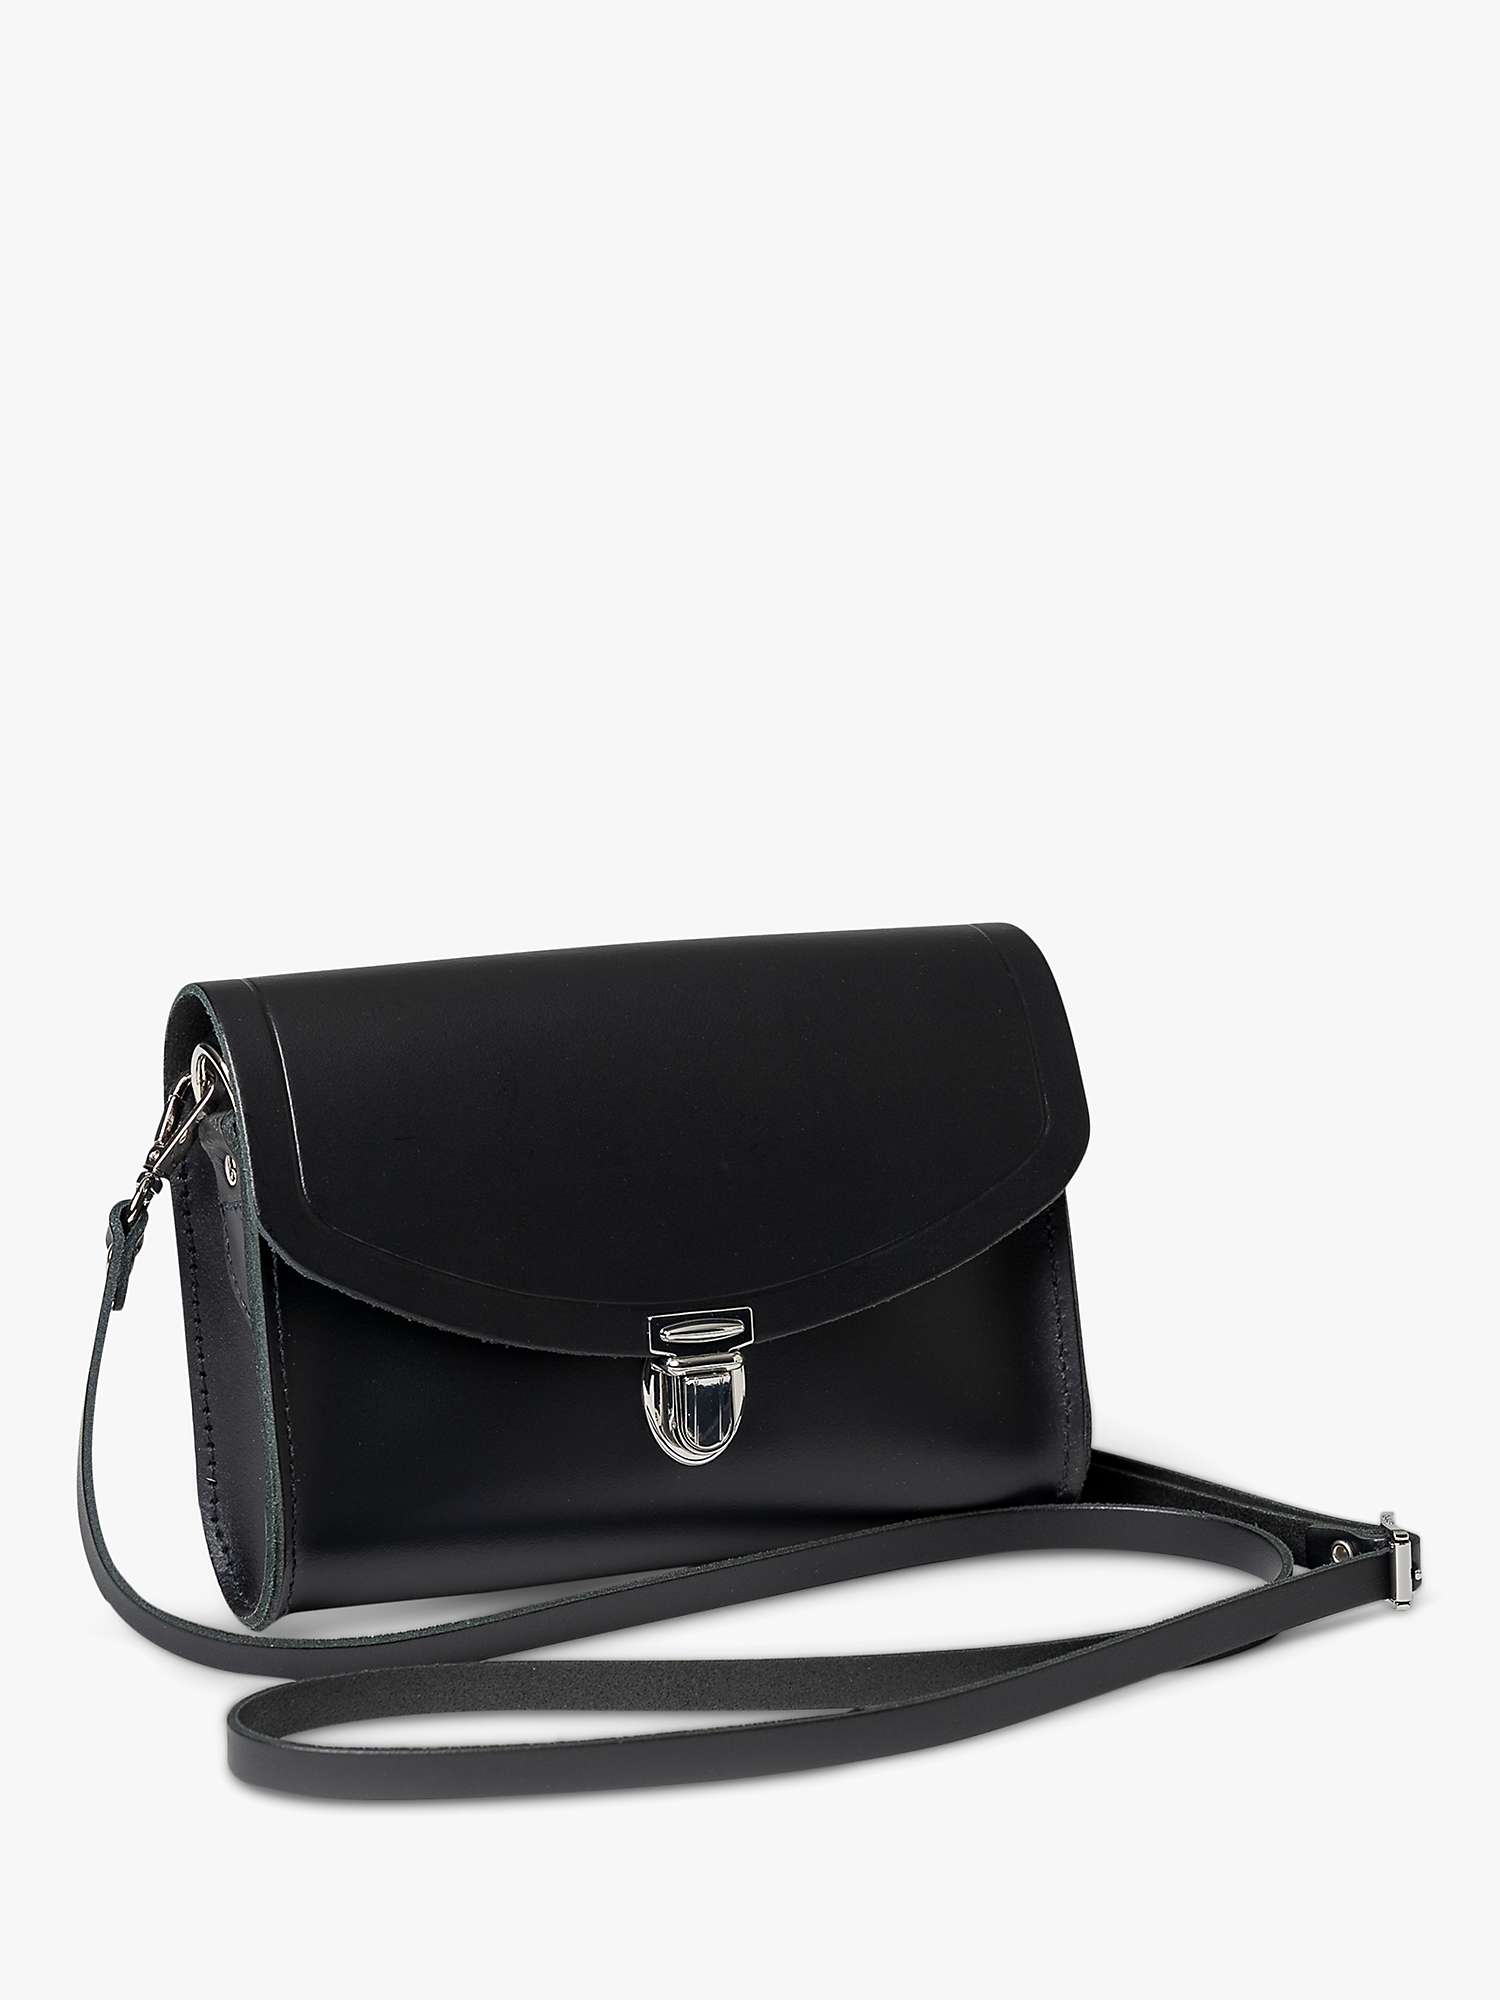 Cambridge Satchel The Medium Pushlock Leather Shoulder Bag, Black at ...